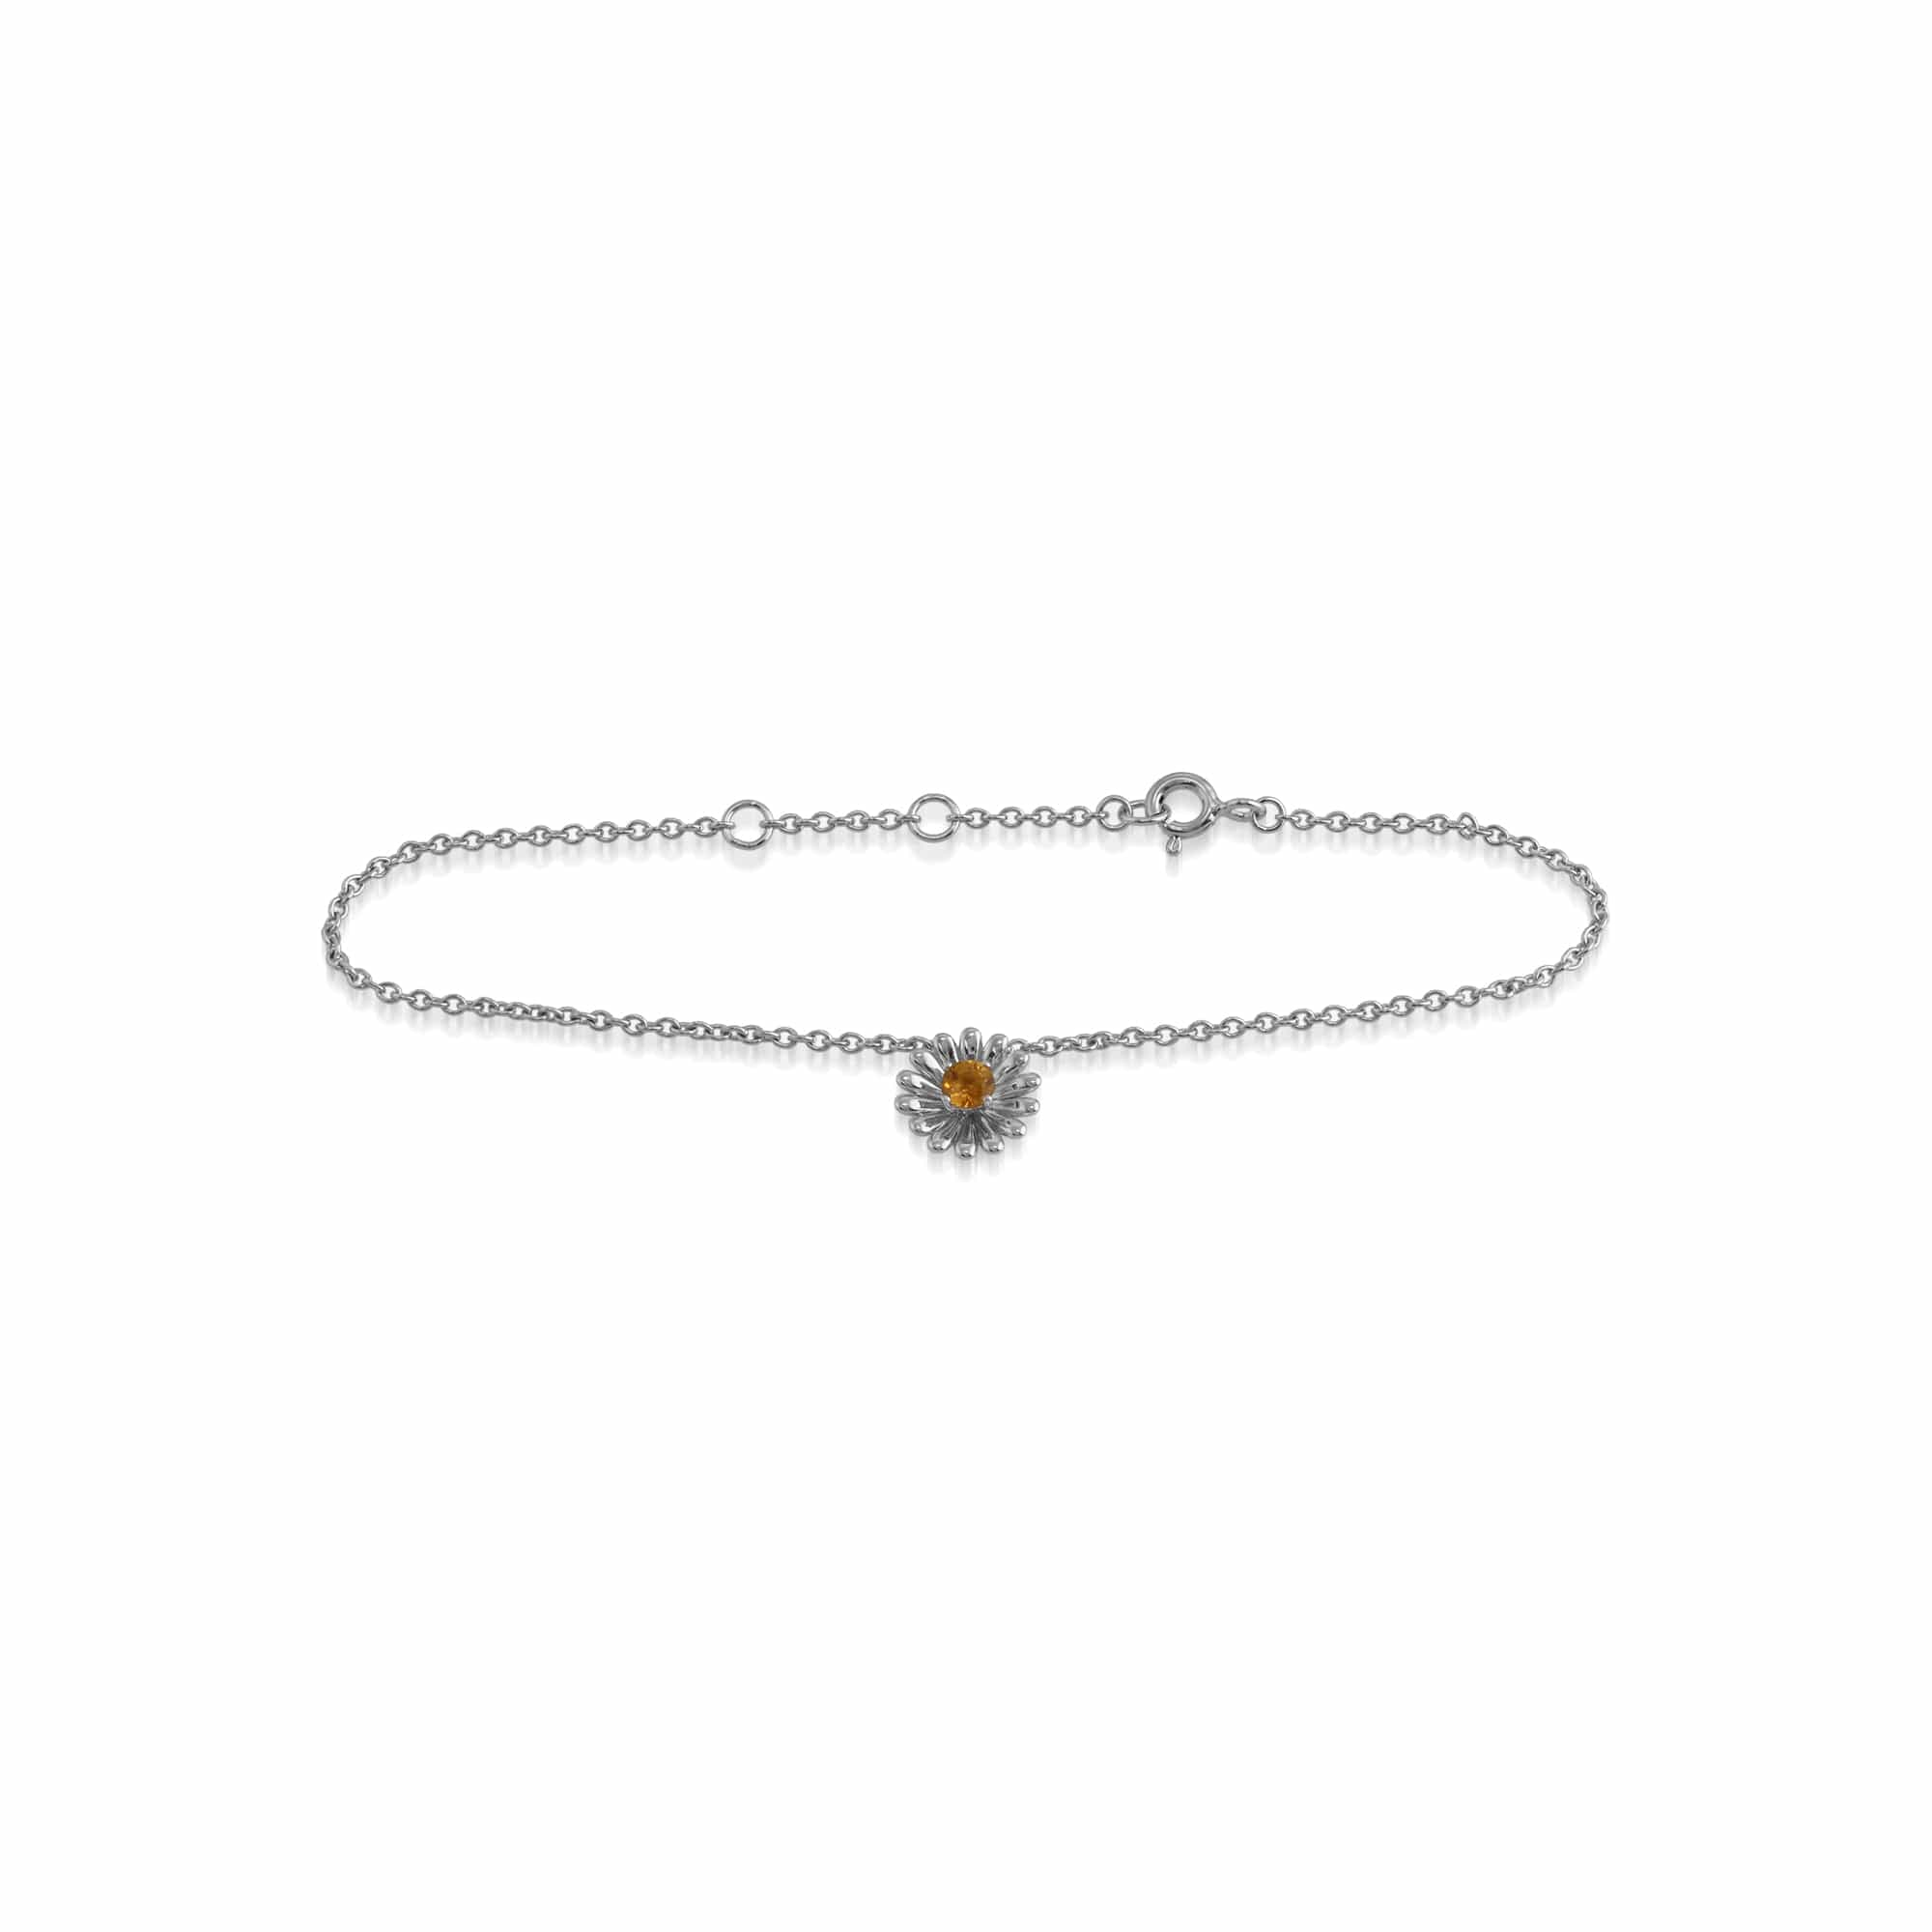 Floral Round Citrine Daisy Flower Single Stone Bracelet in 925 Sterling Silver - Gemondo